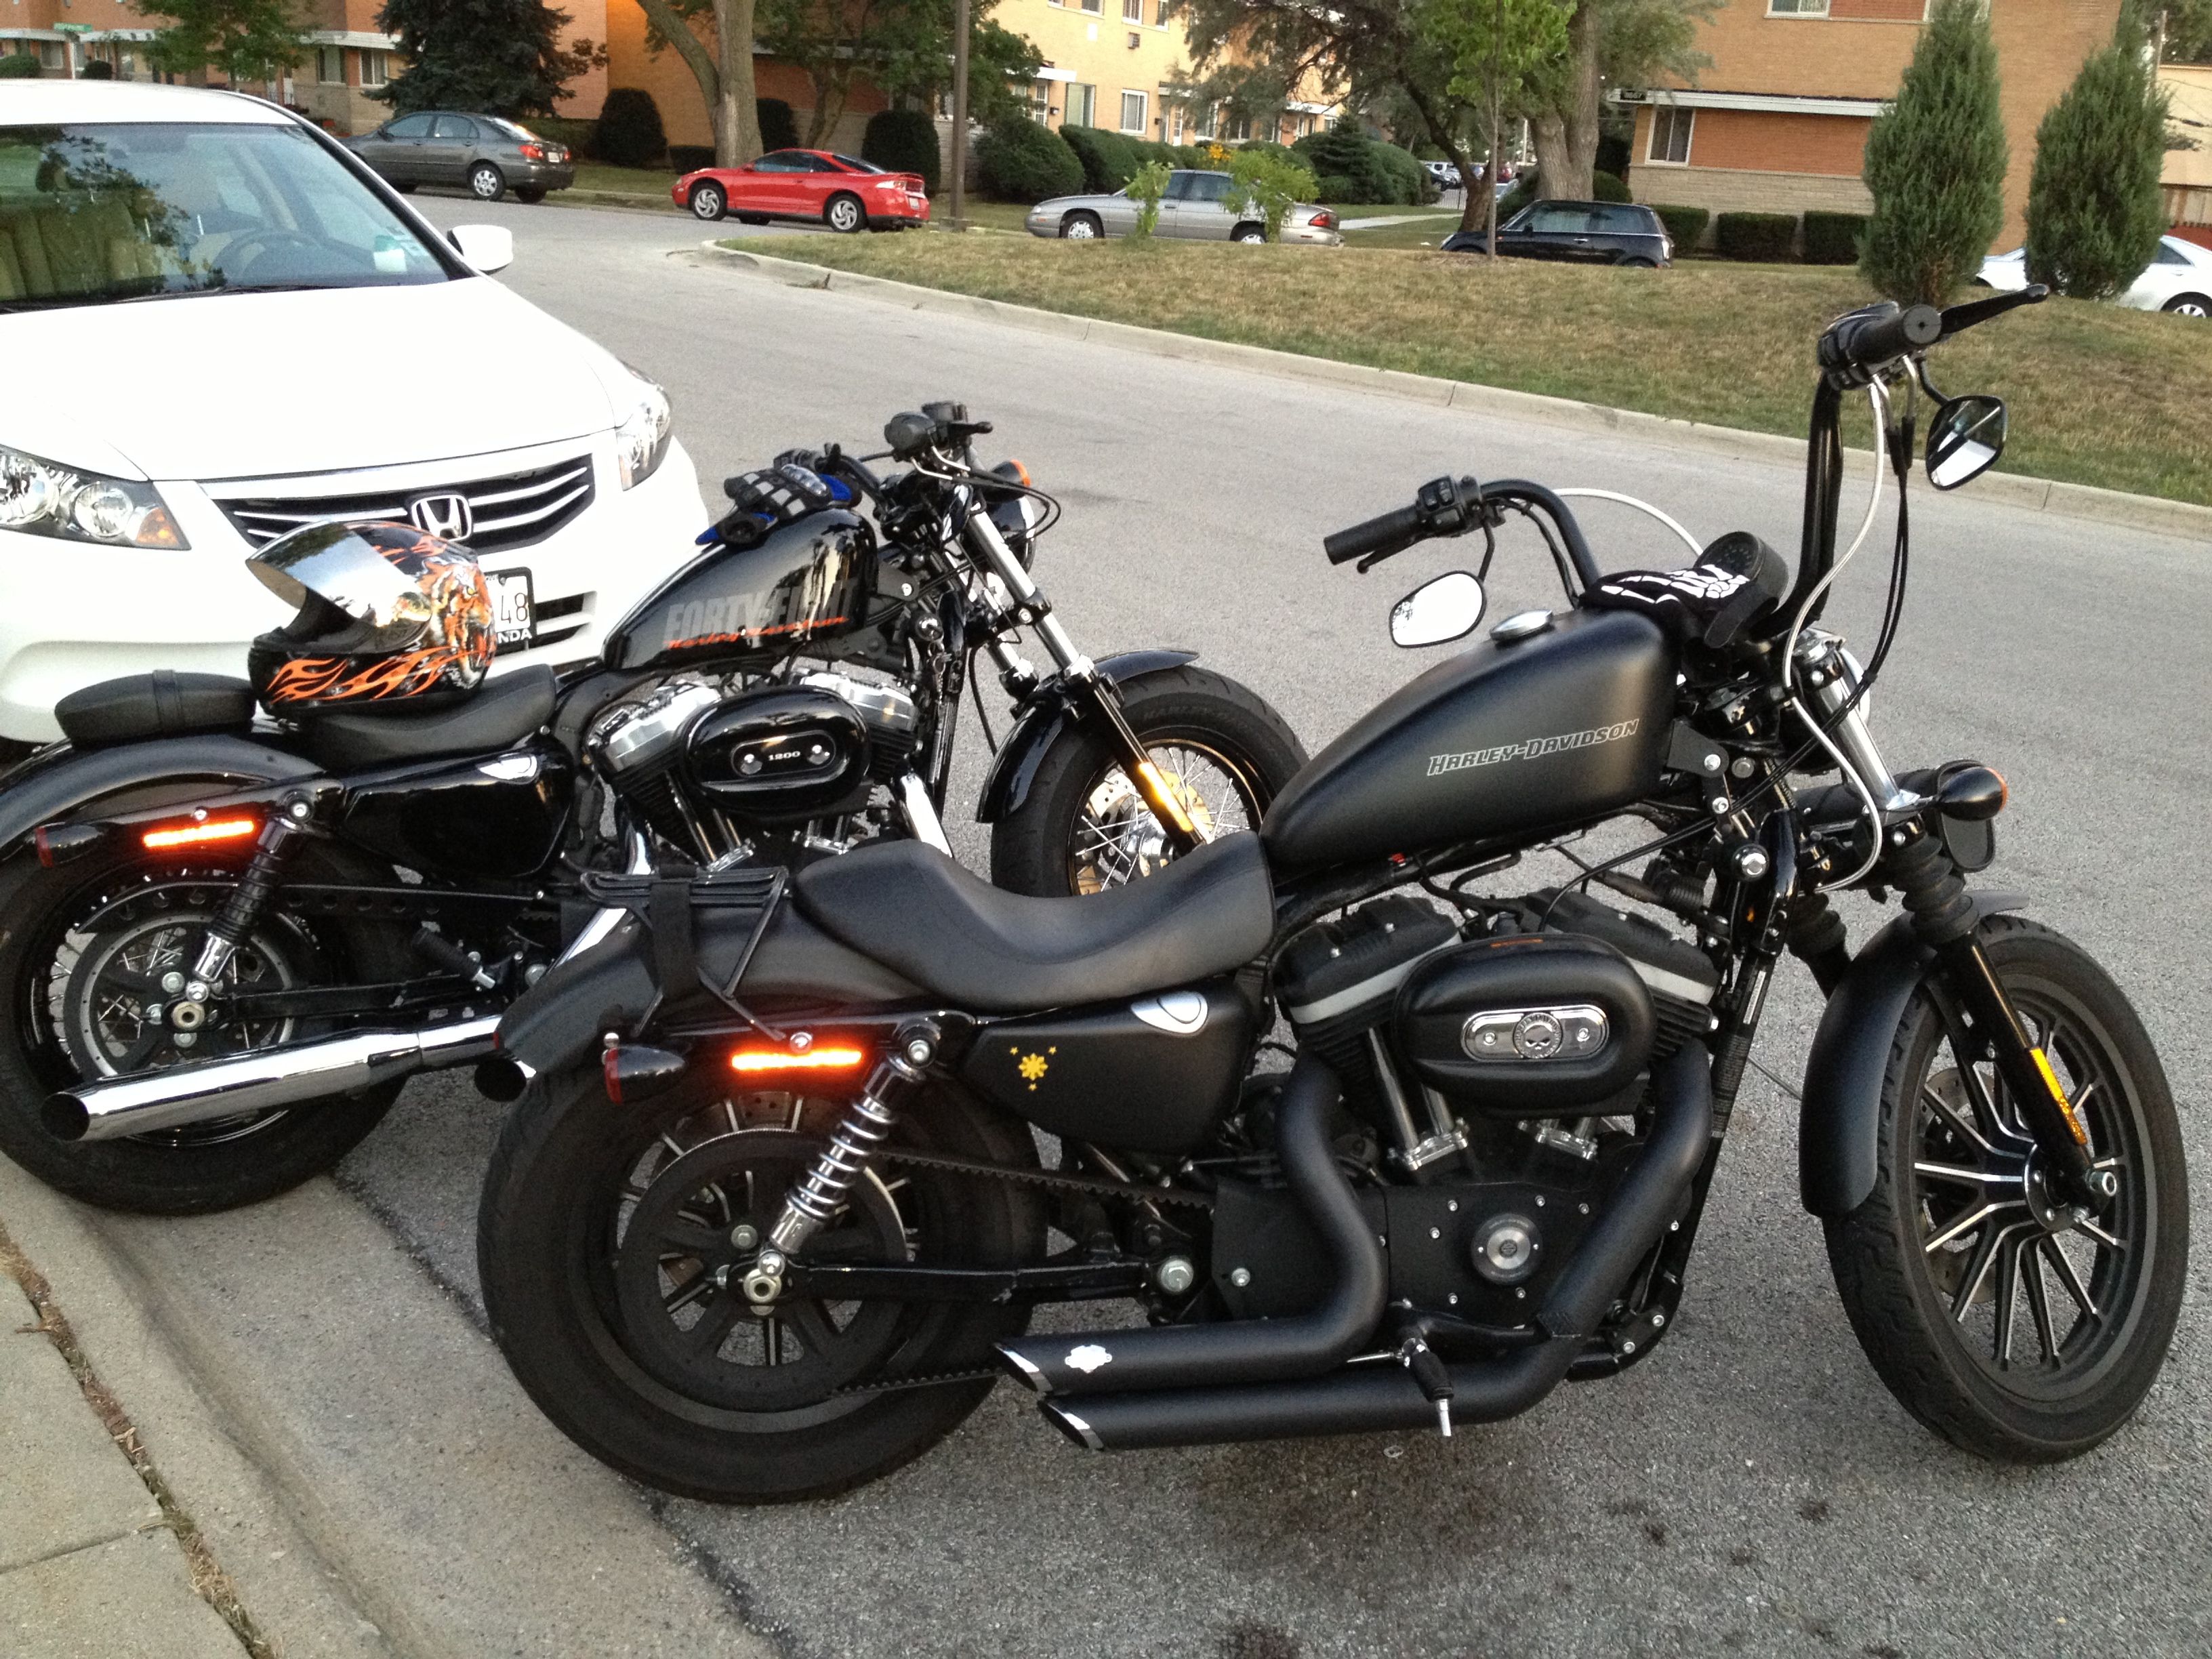 Harley-davidson iron 883 vs harley-davidson superlow - know which is better! - bikewale